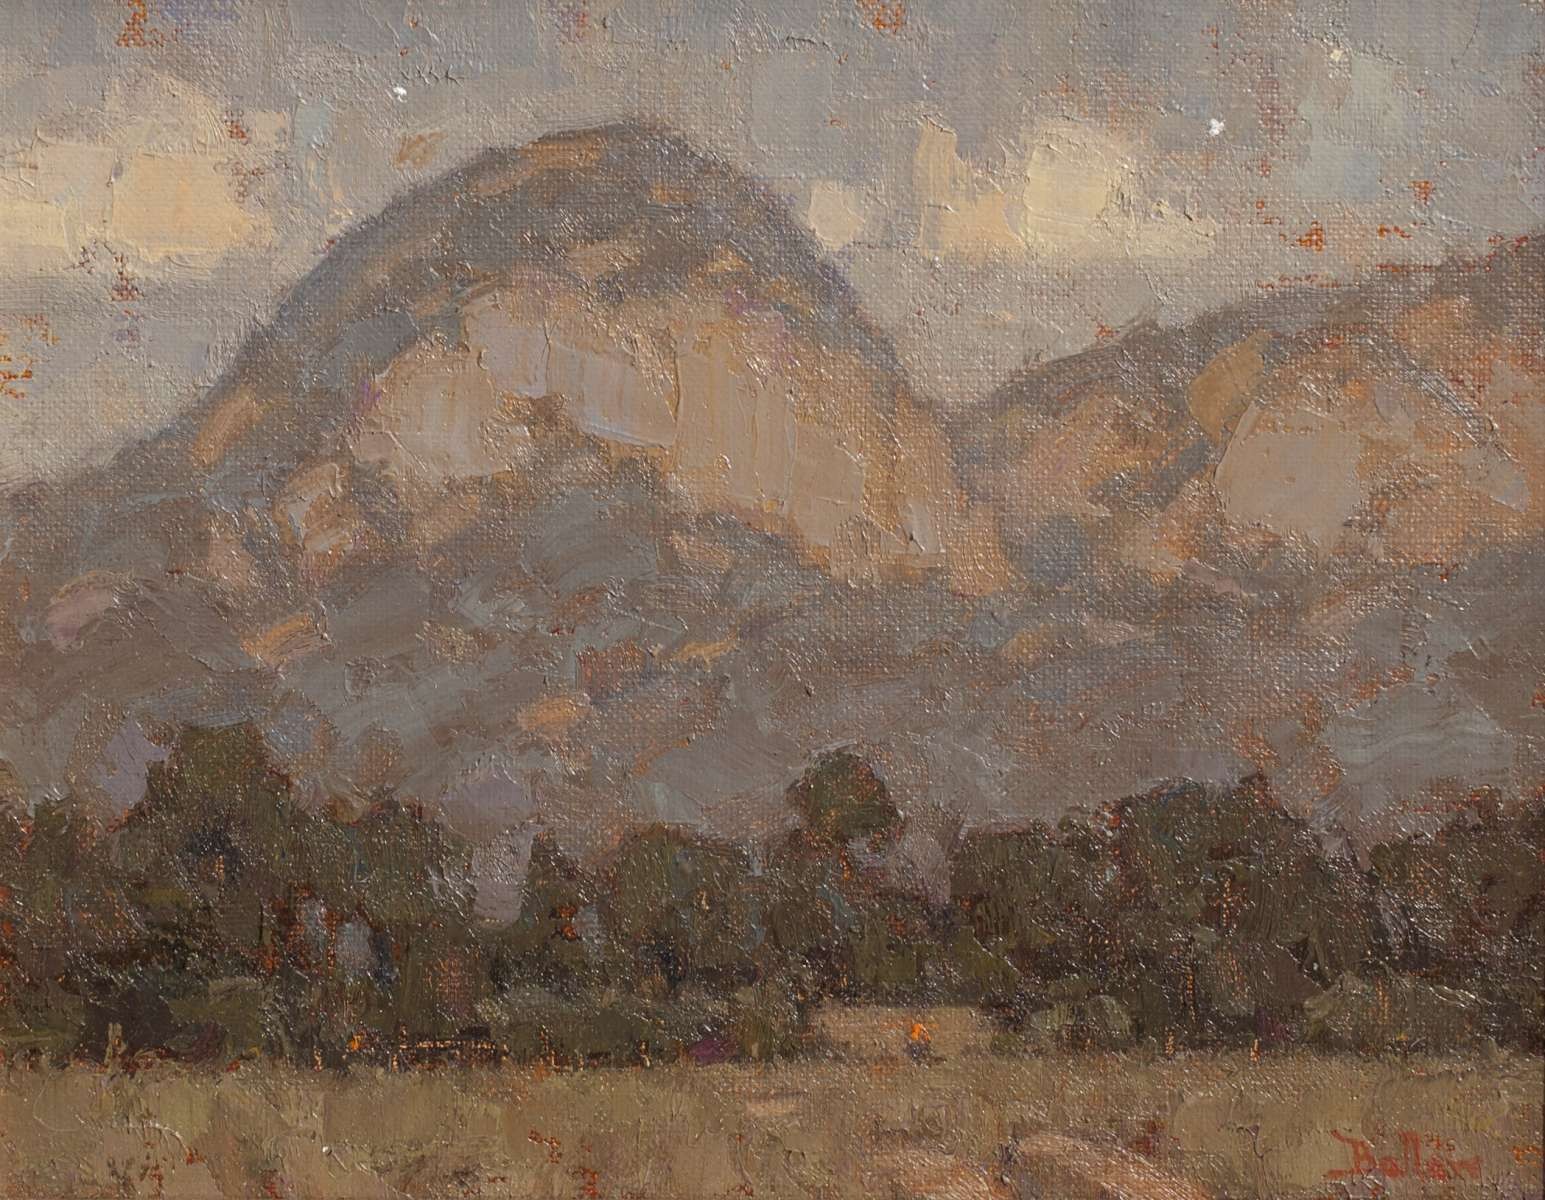 Taos Mountain by David Ballew